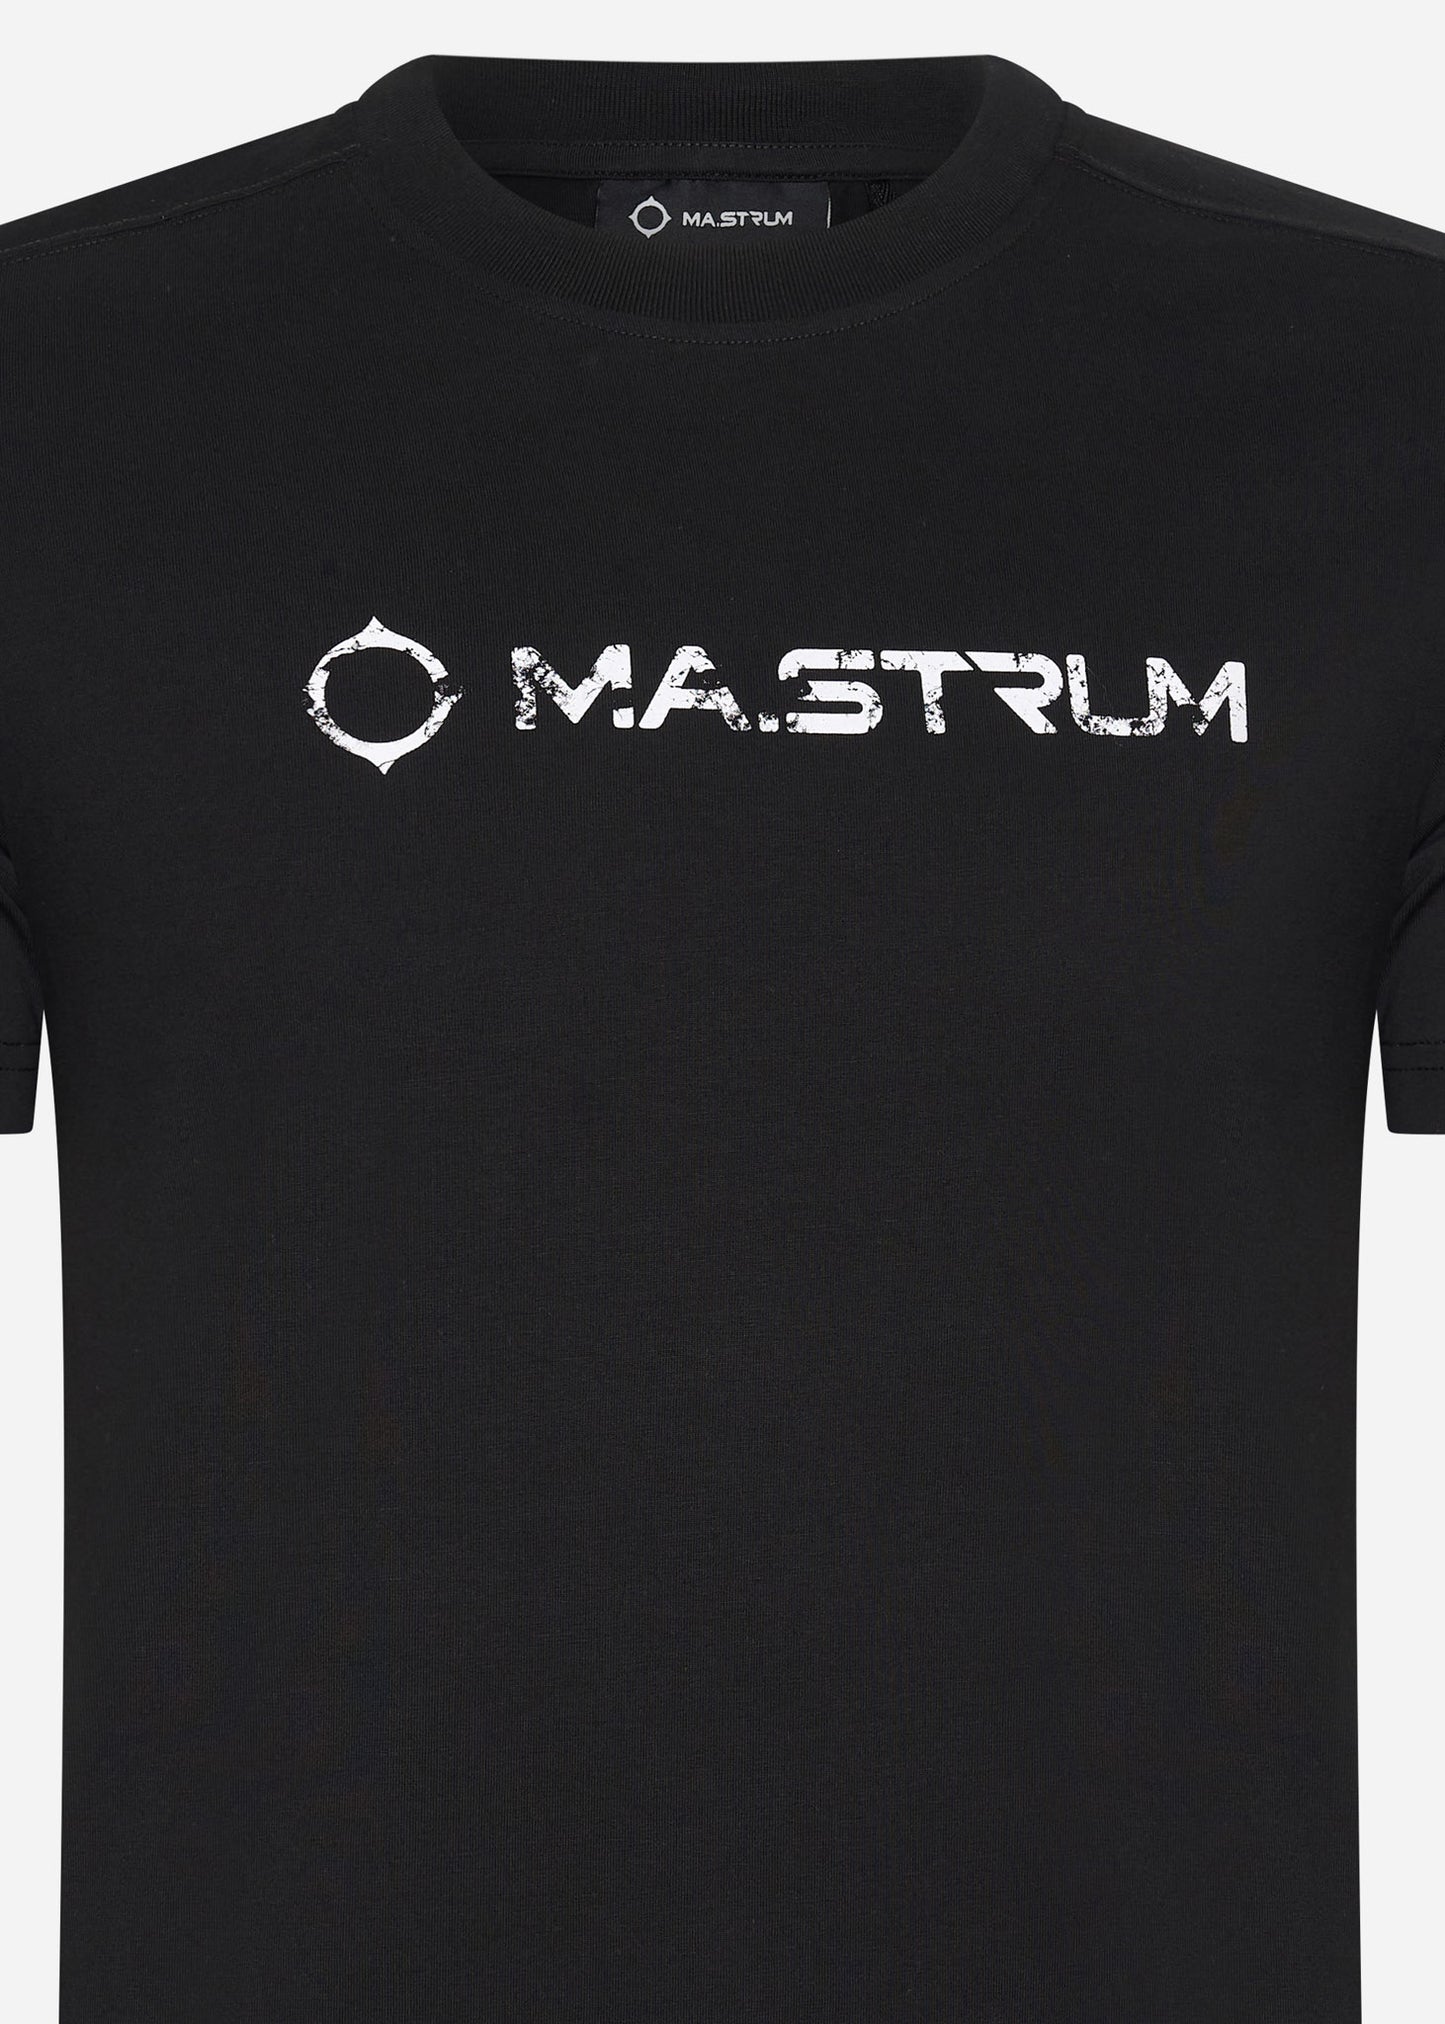 MA.Strum T-shirts  Cracked logo tee - black 